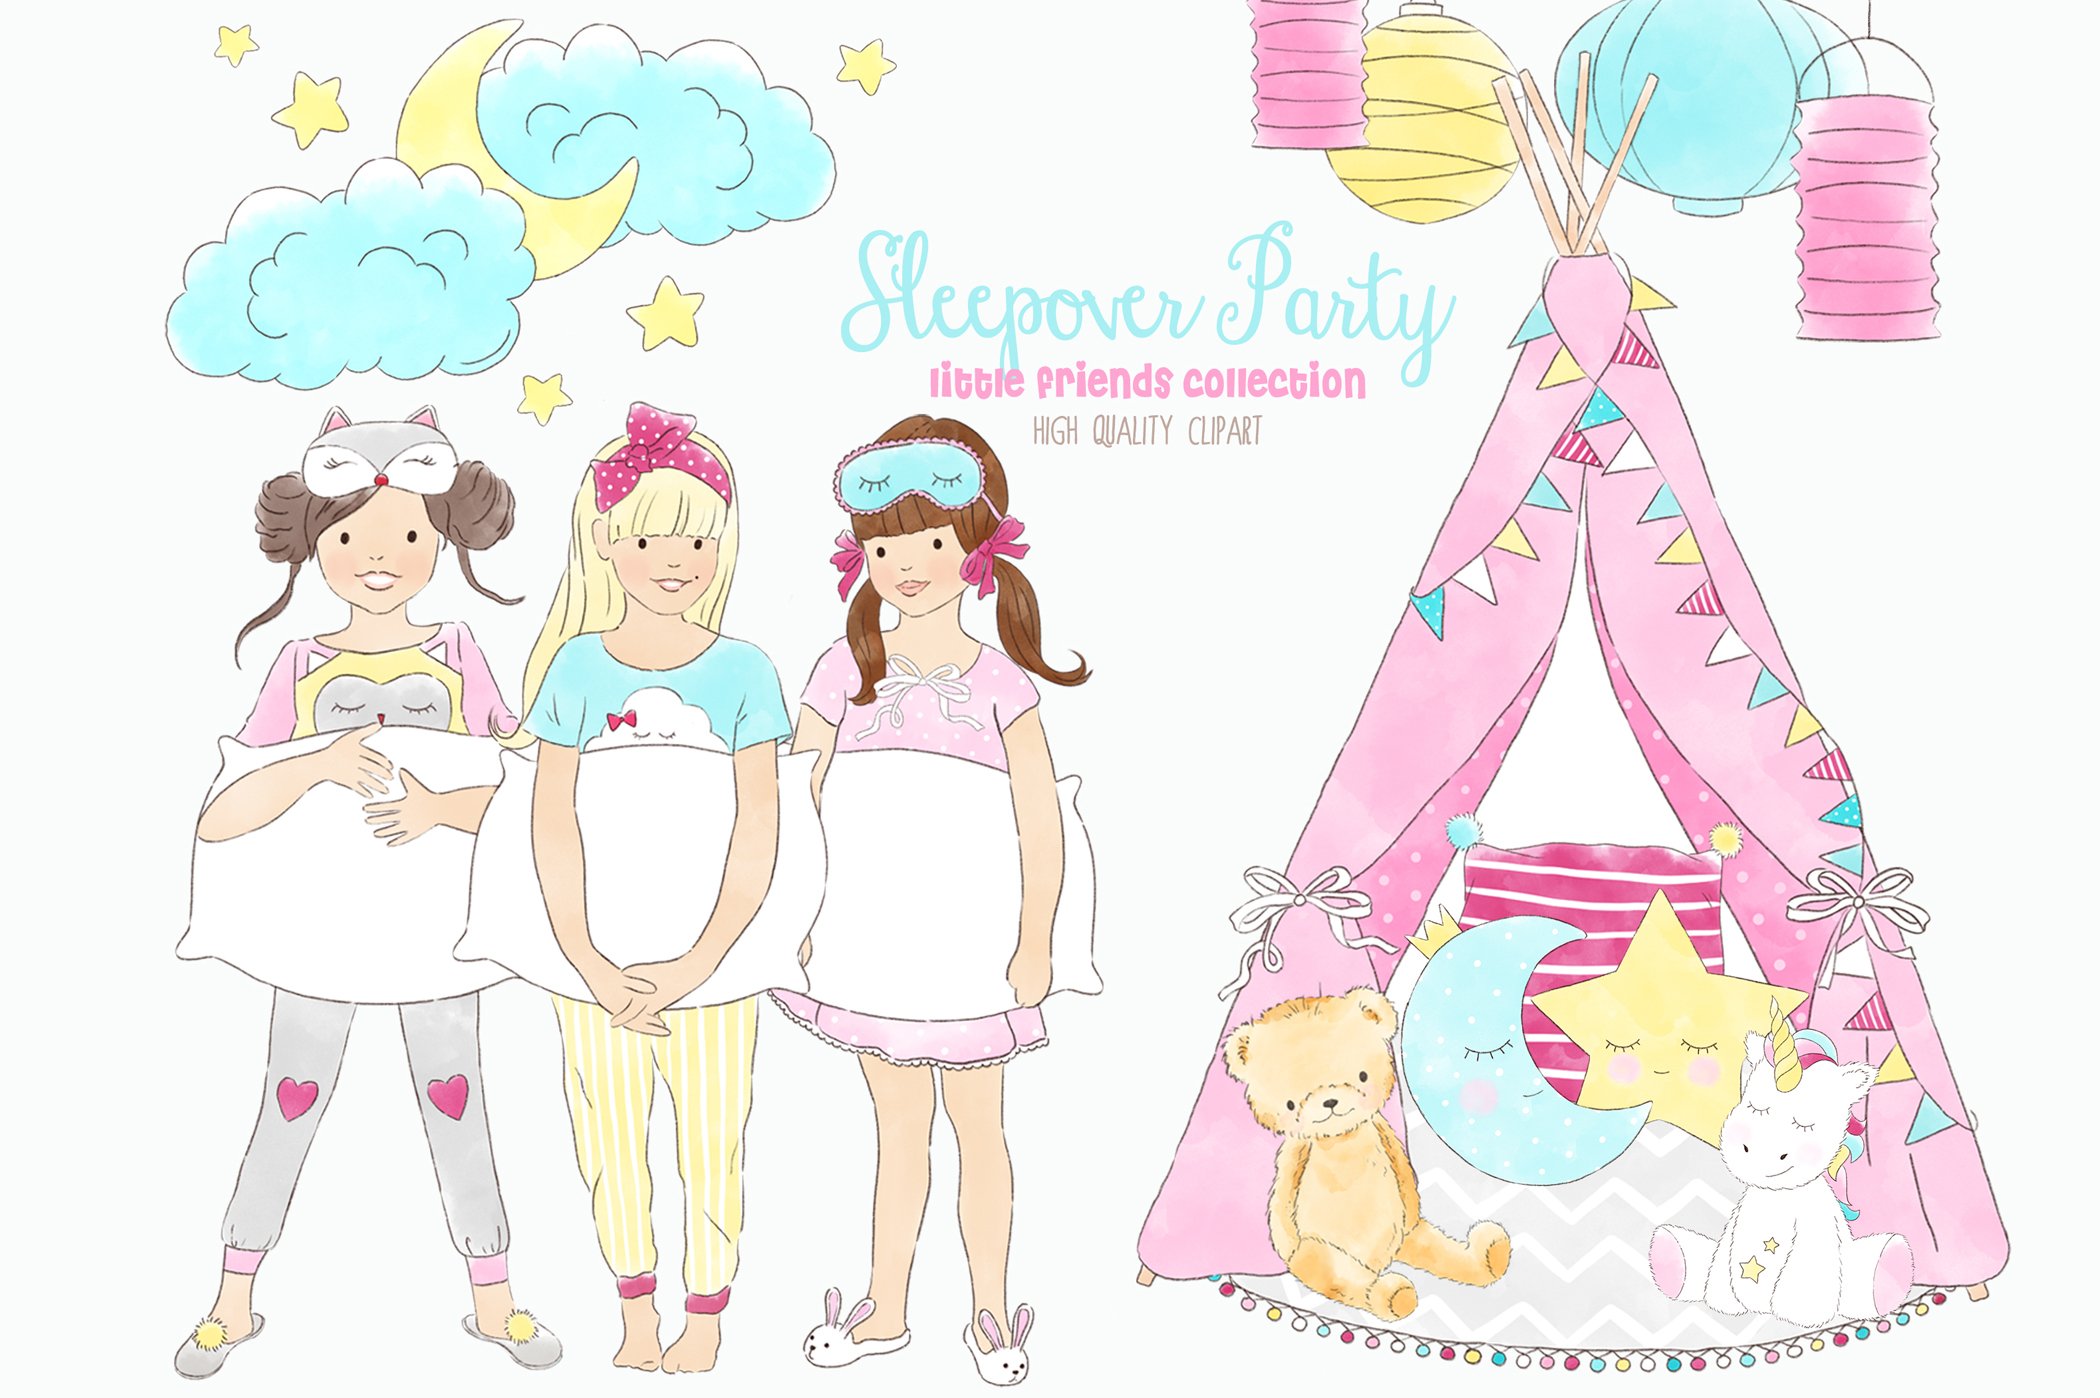 Slumber Sleepover Pajama Party cover image.